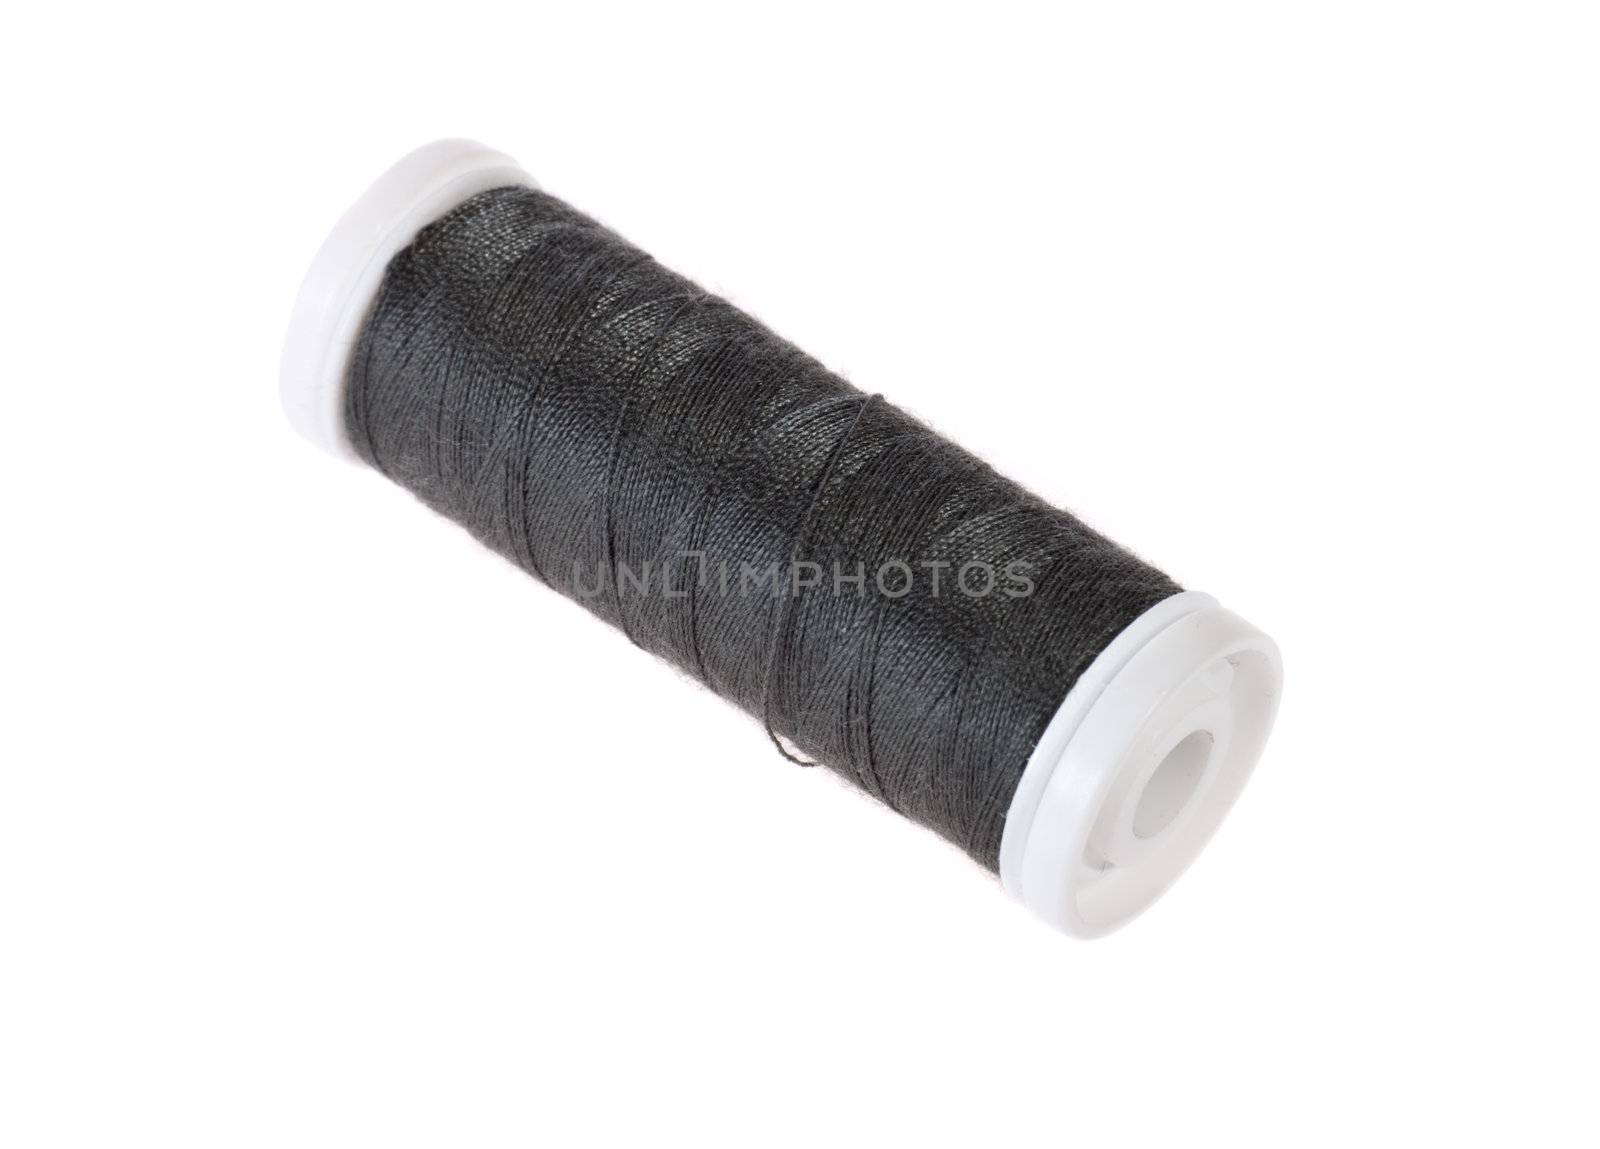 Black bobbin thread isolated on white 